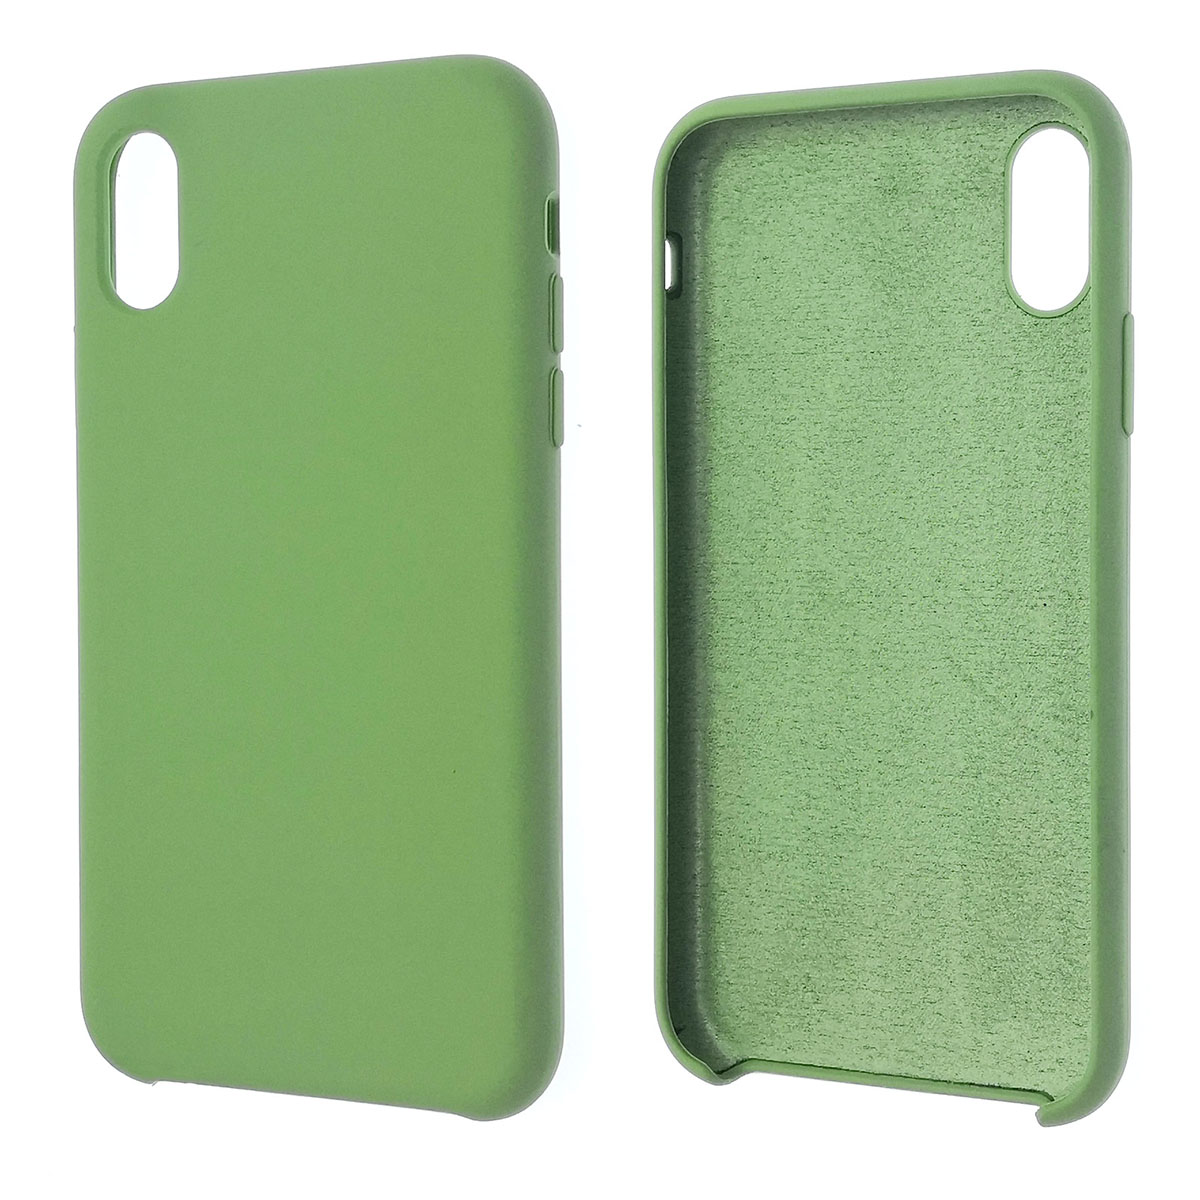 Чехол накладка Silicon Case для APPLE iPhone XR, силикон, бархат, цвет бледно зеленый.